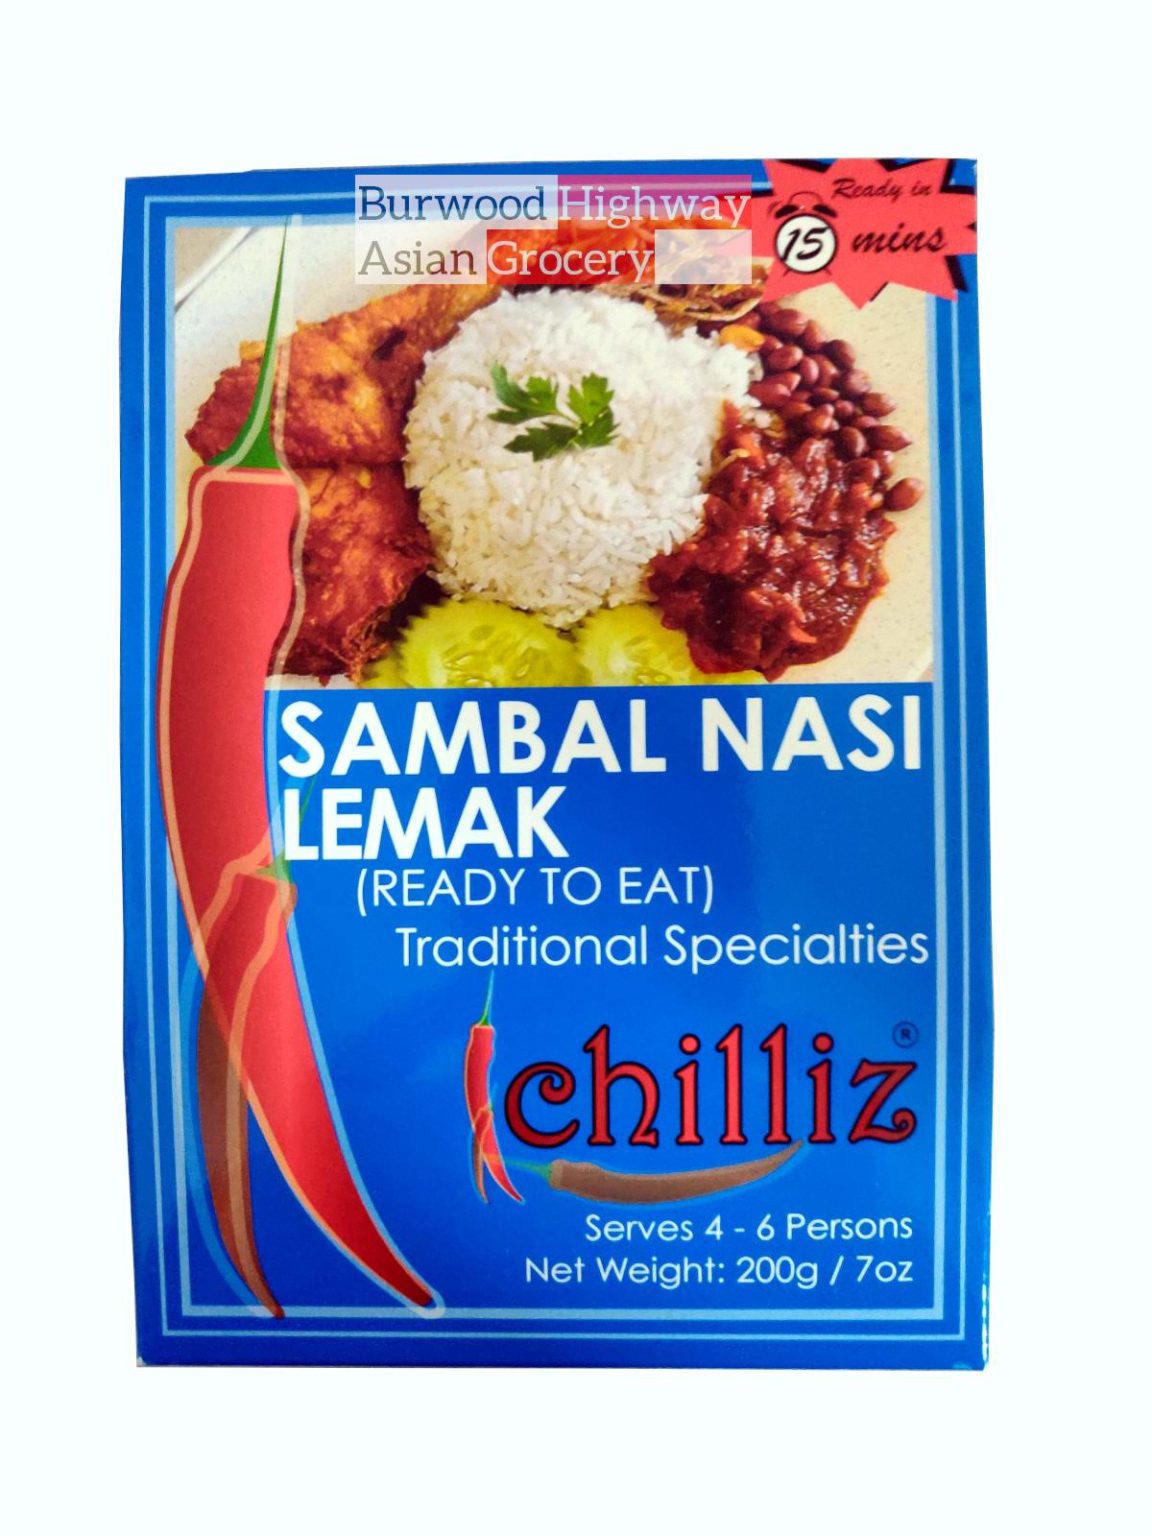 Chilliz Sambal Nasi Lemak 200g - Burwood Highway Asian Grocery